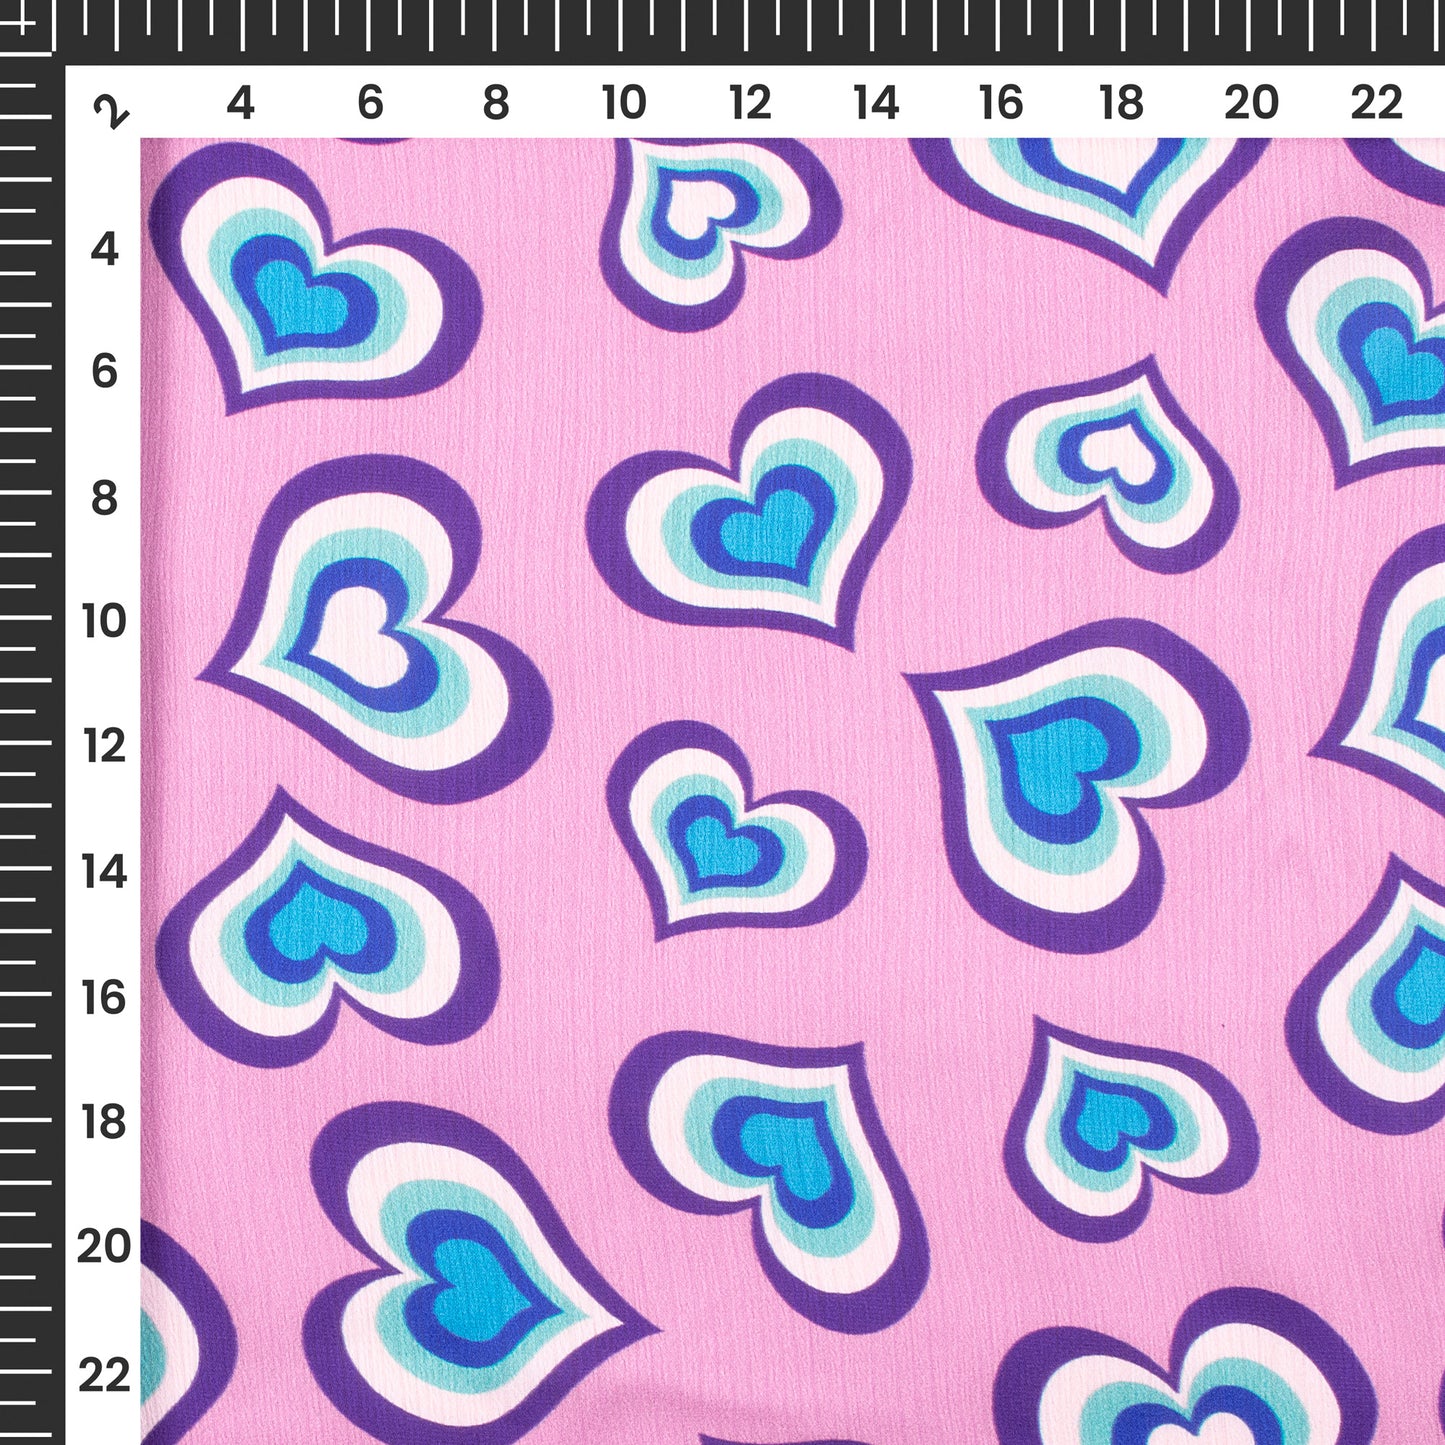 Bestselling Hearts Digital Print Chiffon Satin Fabric